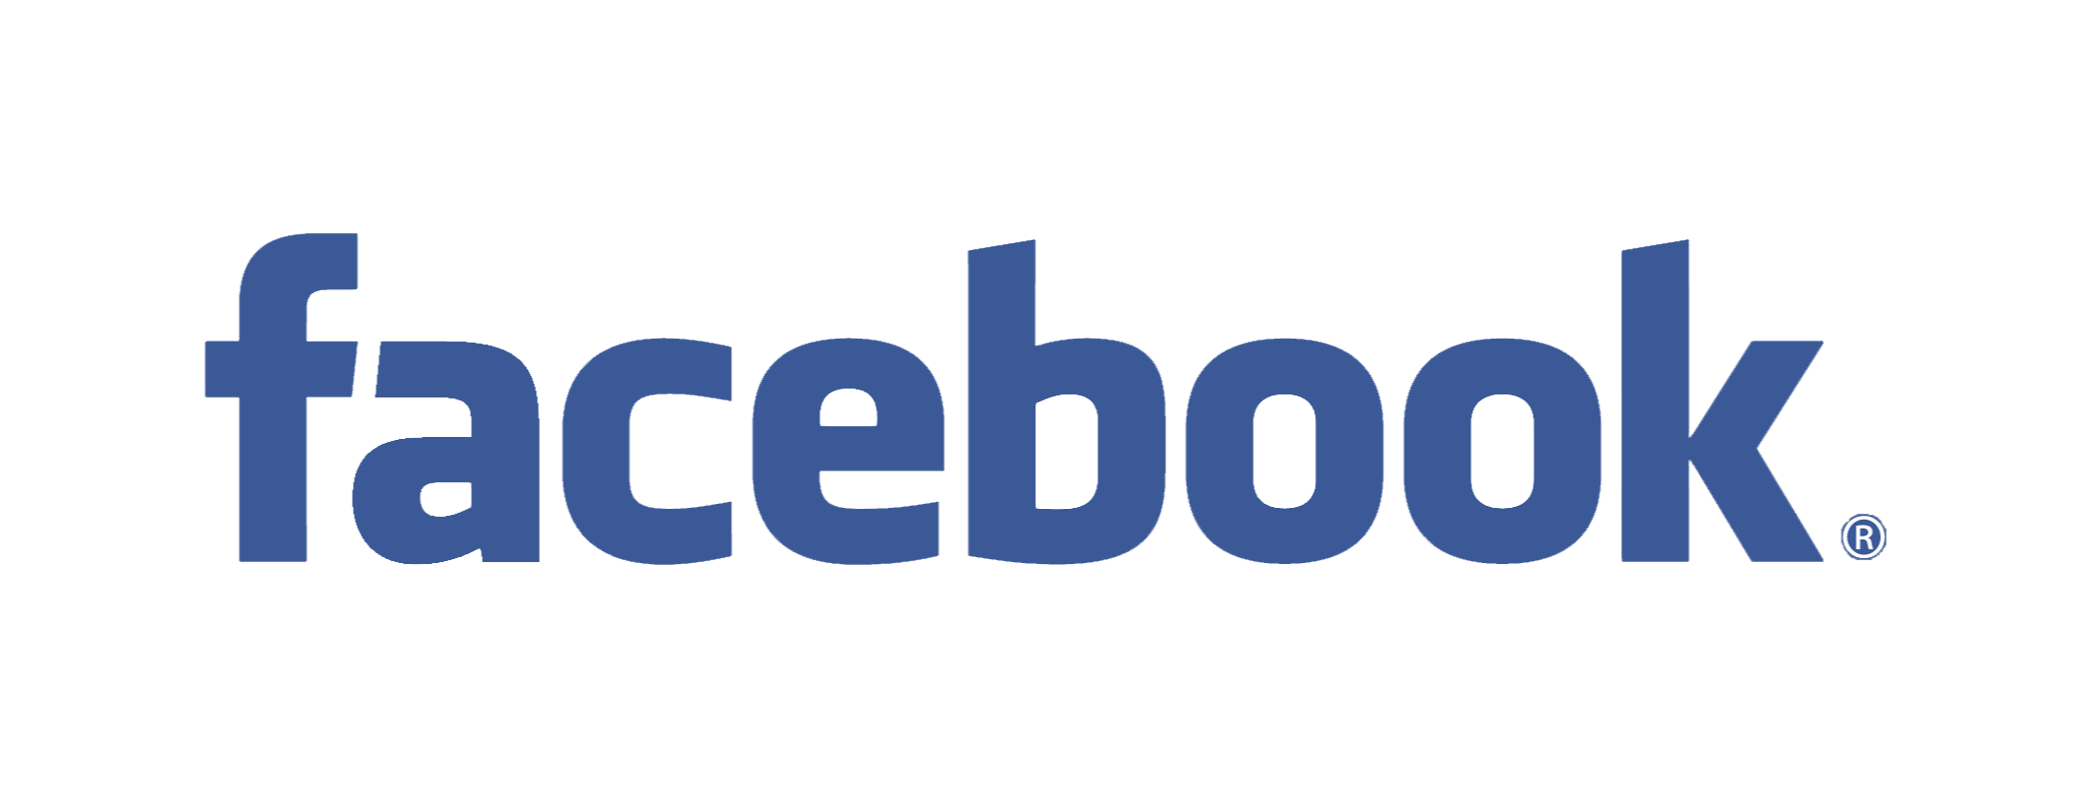 Facebook_logo-8.png